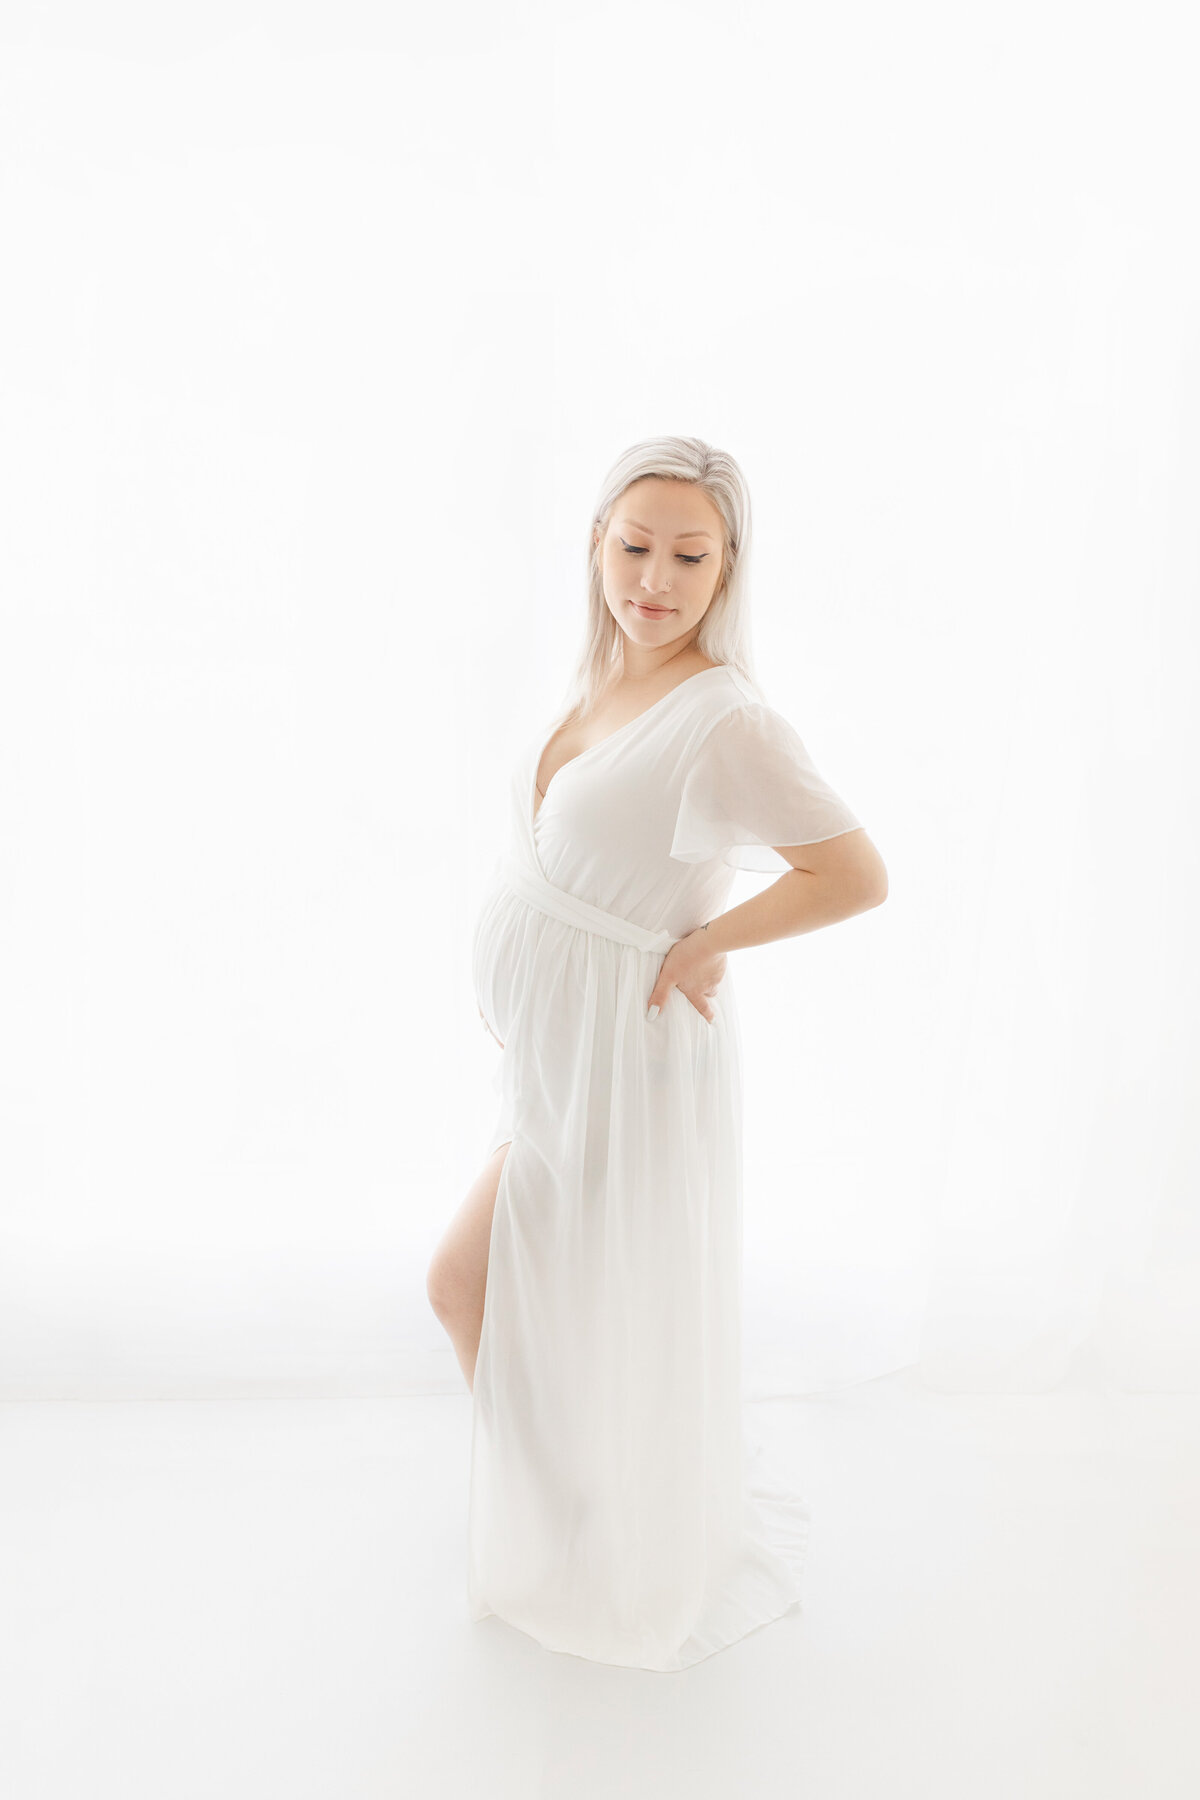 jacksonville-maternity-photographer-154